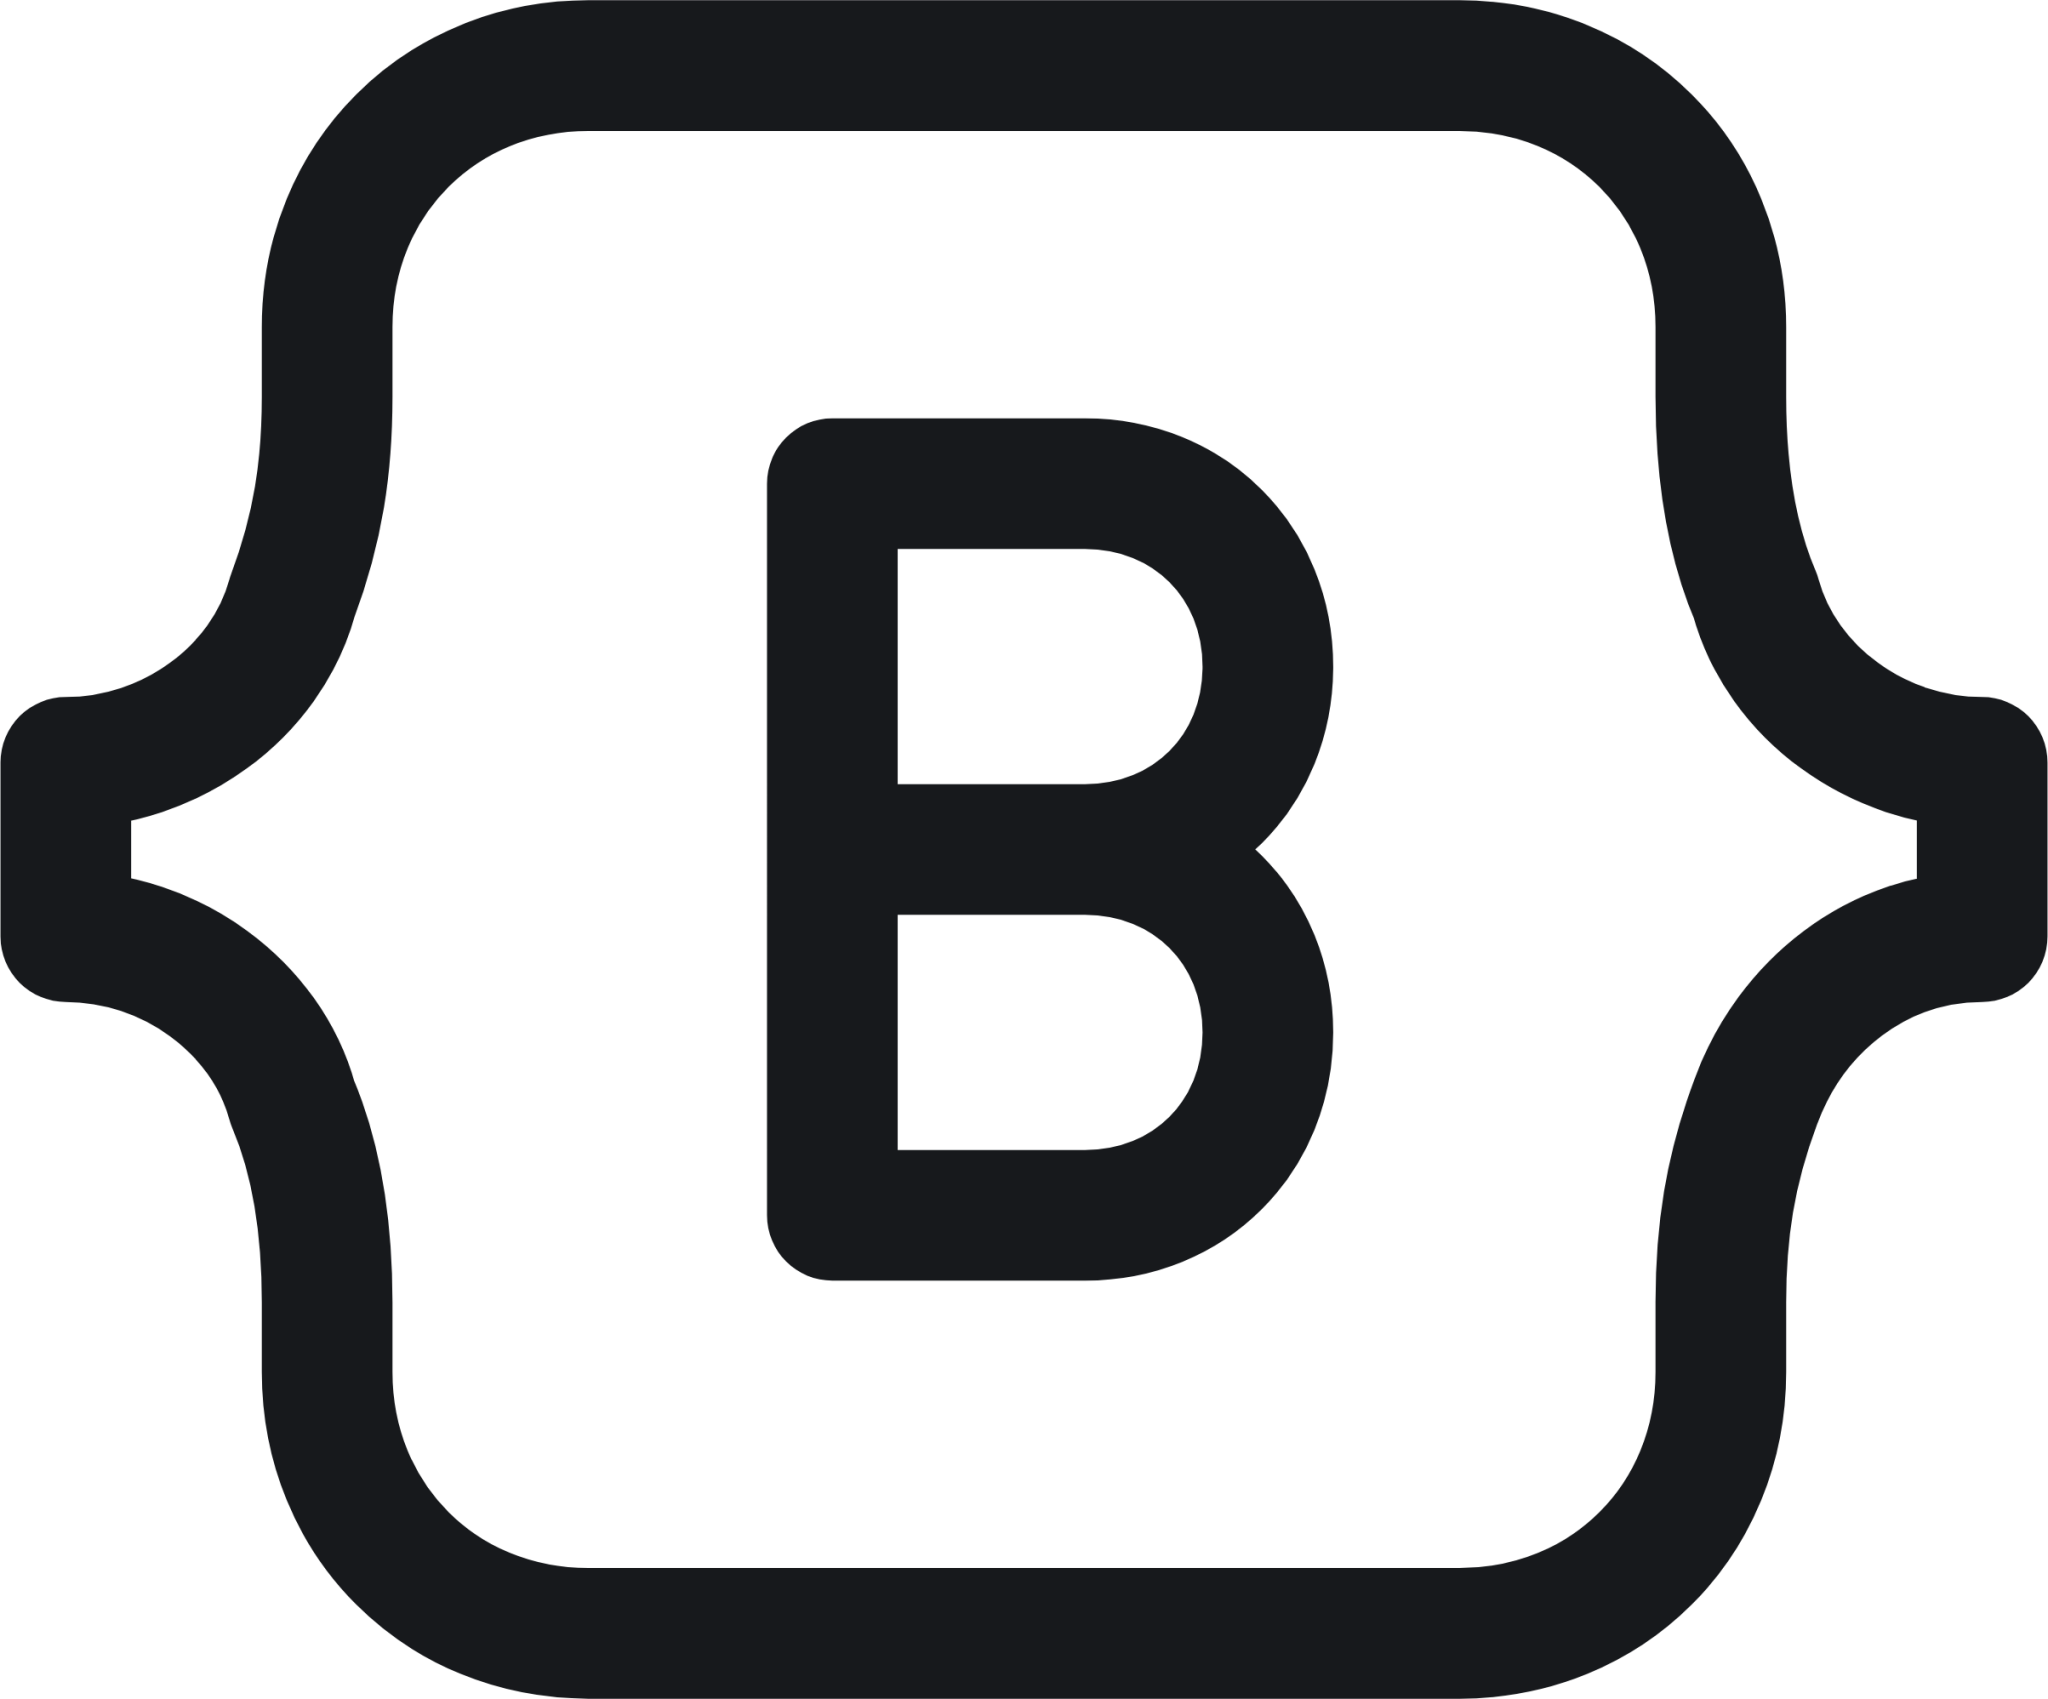 bootsrap icon